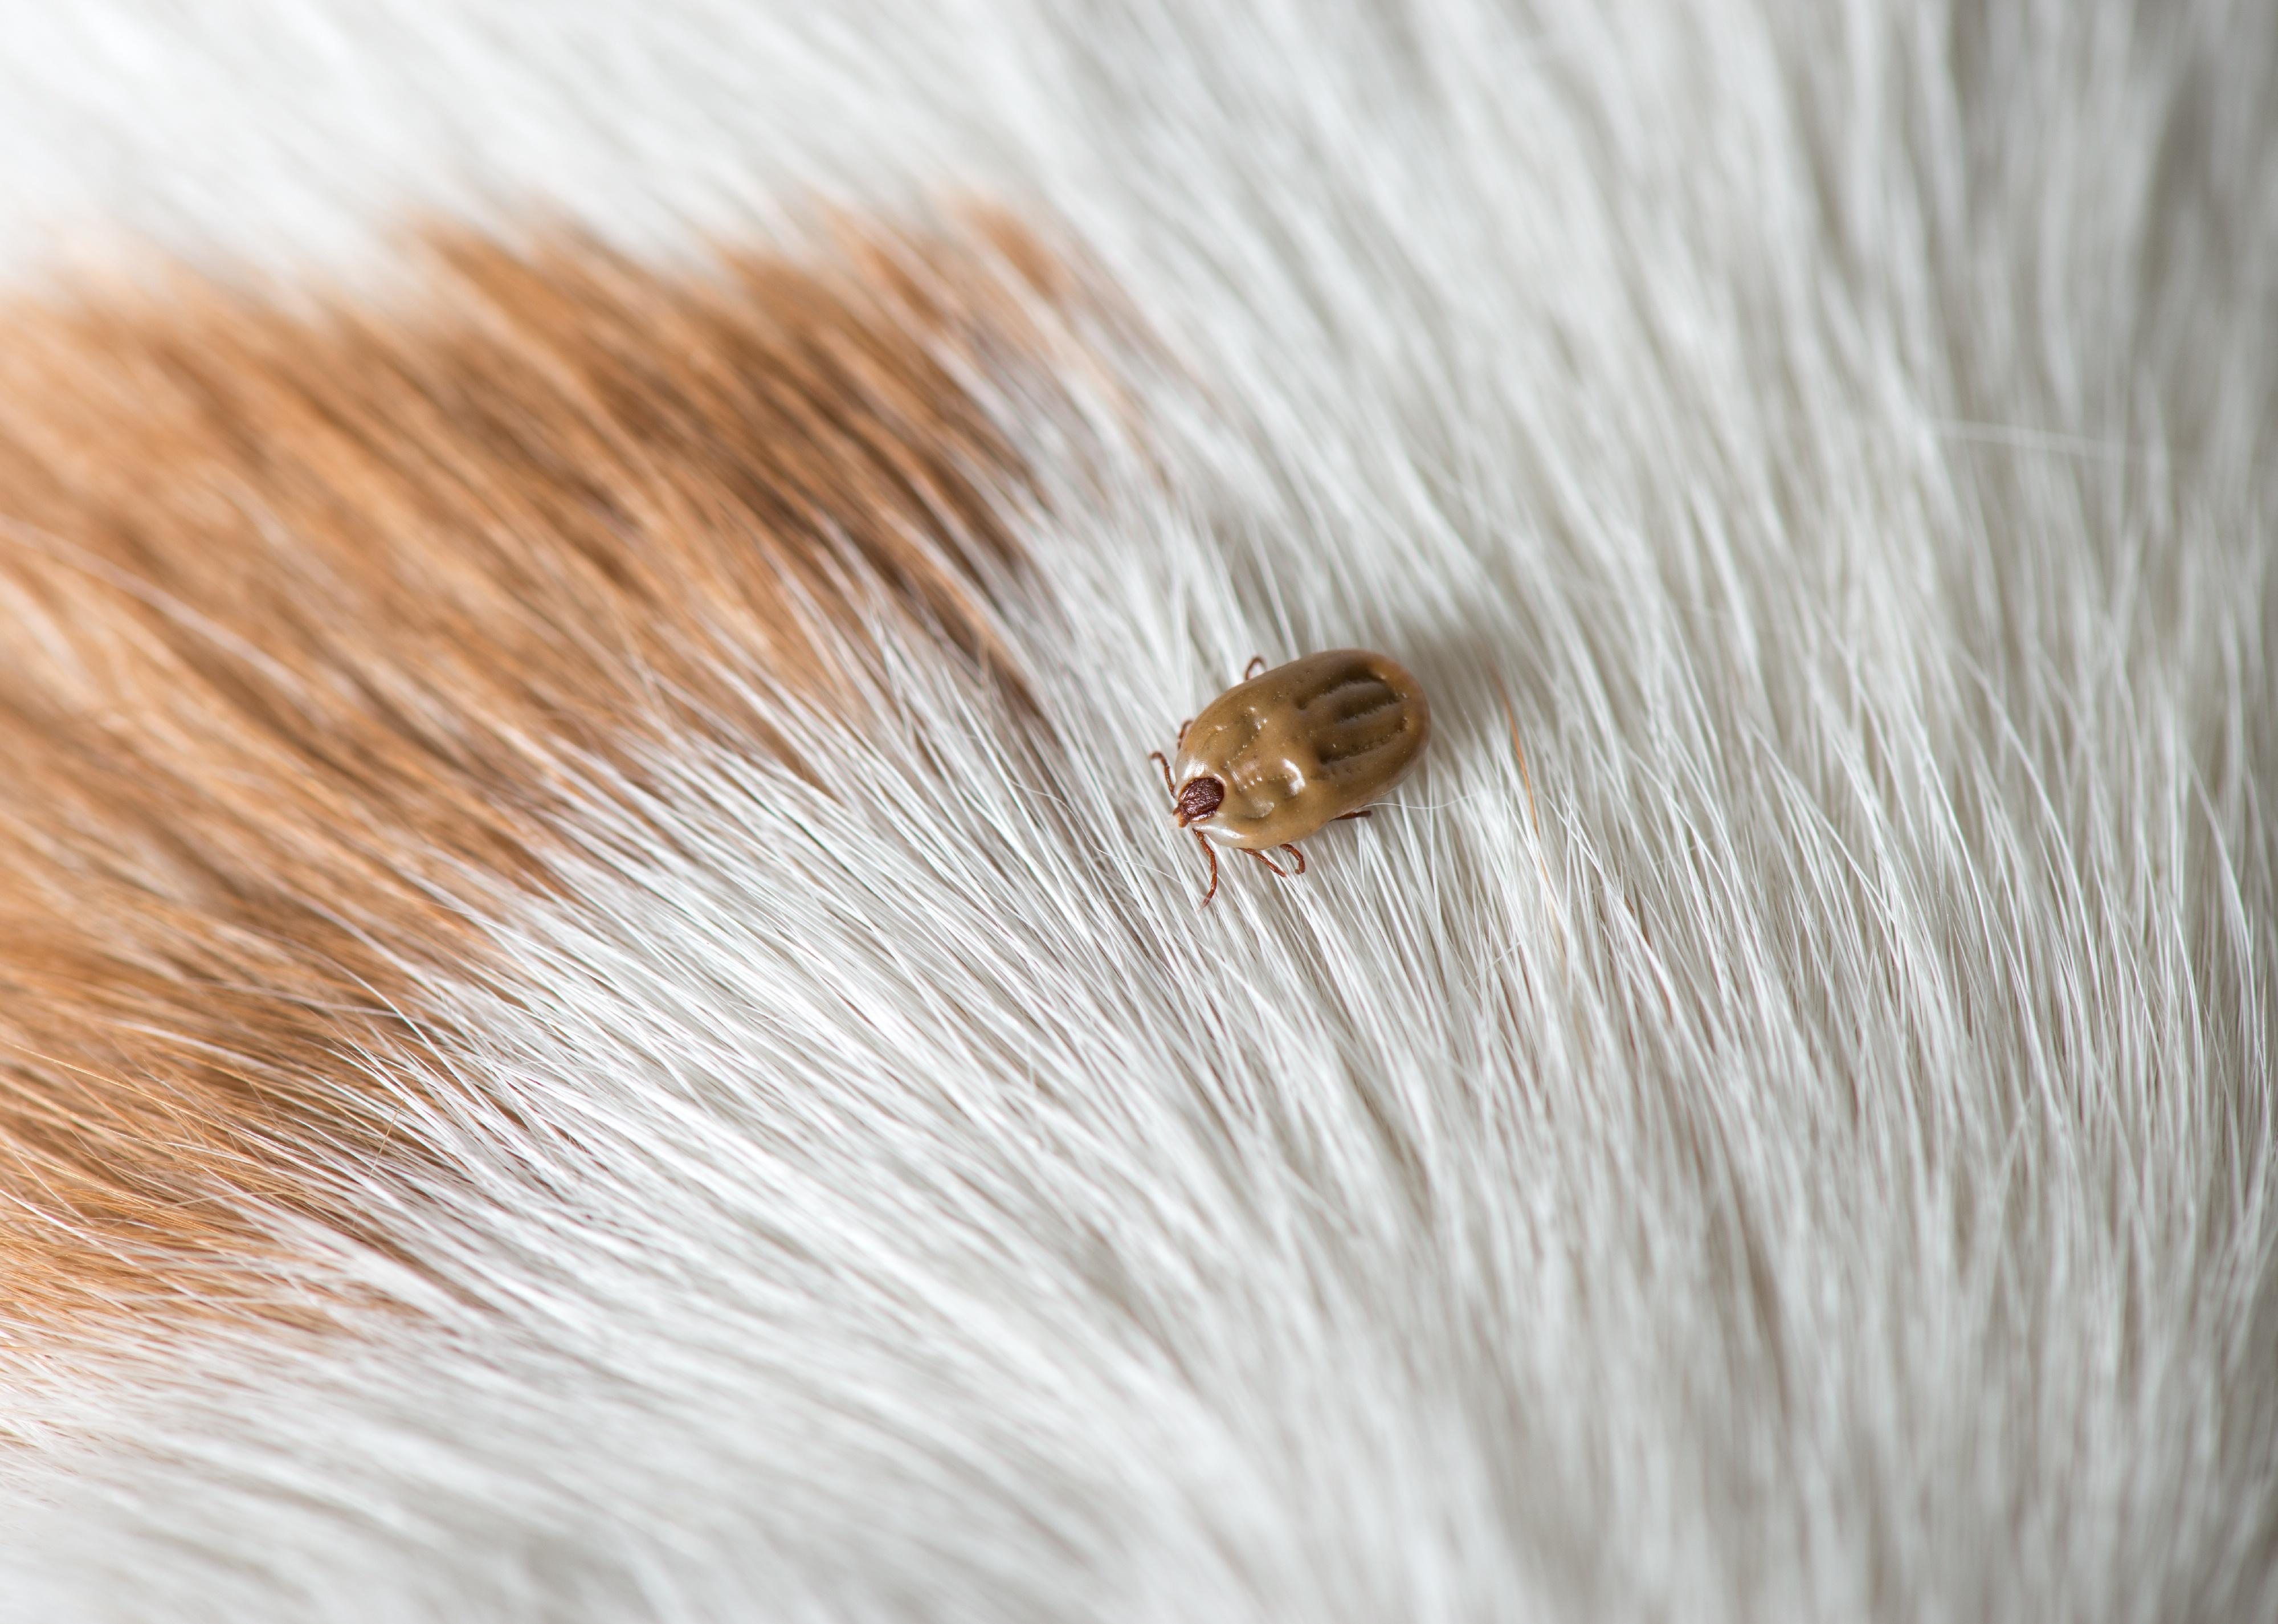 A tick on a dog's white fur.